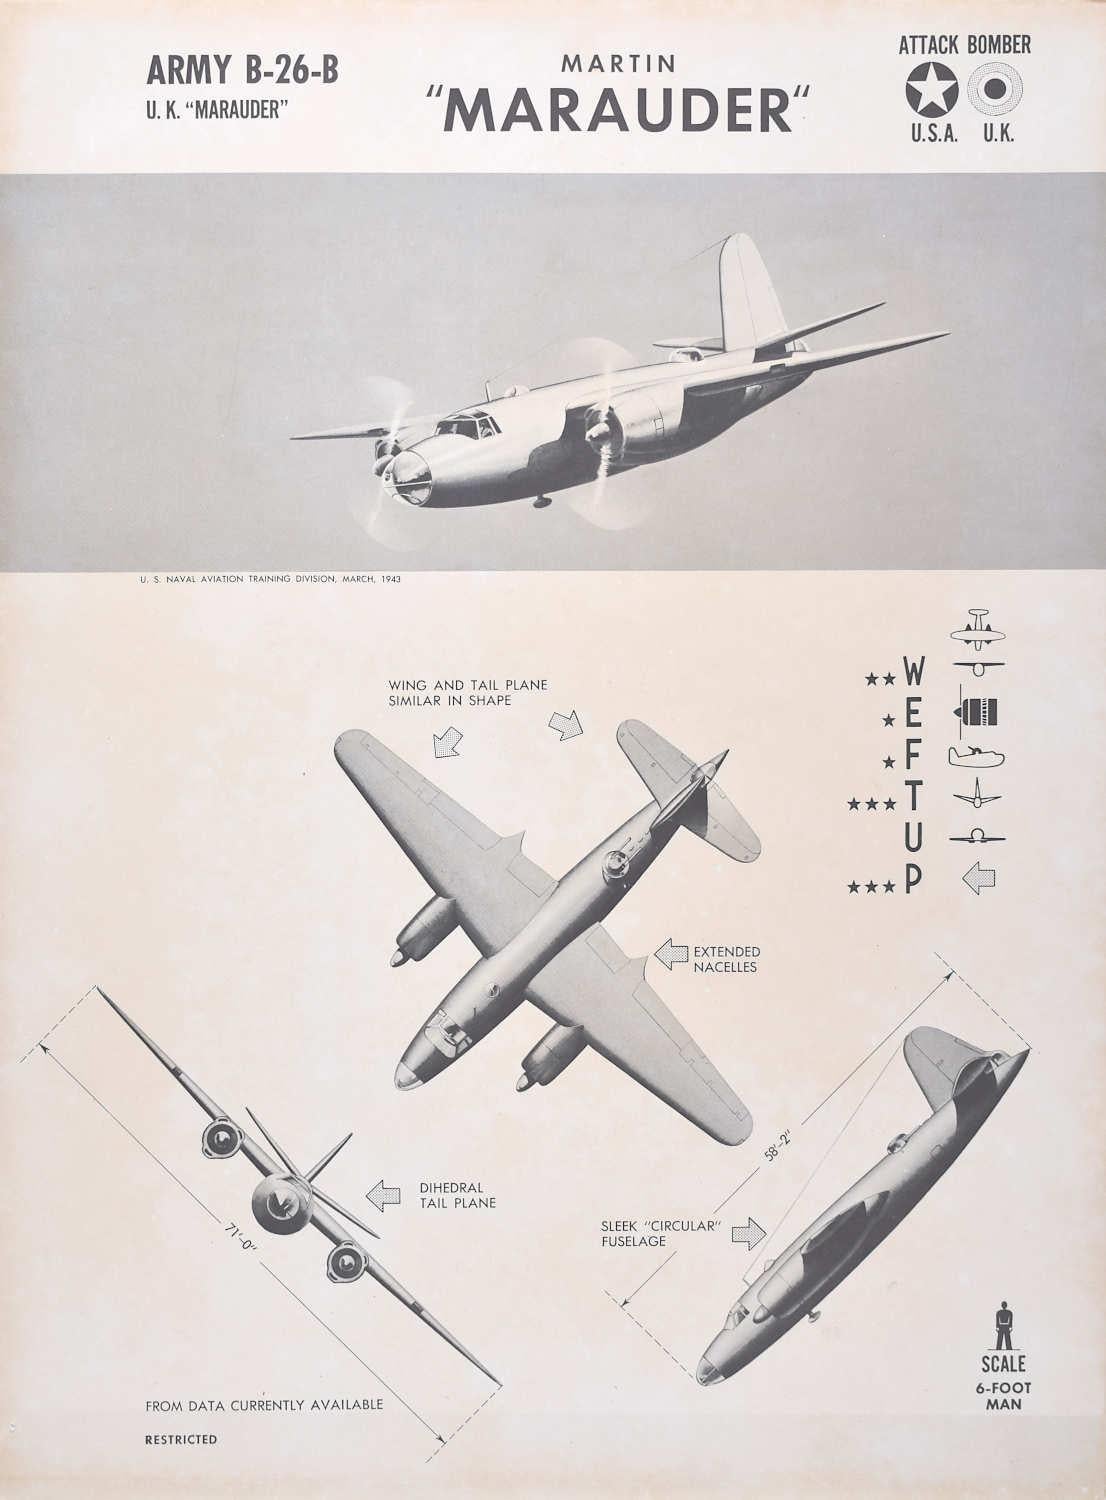 1943 Martin "Marauder" USA UK attack bomber plane identification poster WW2 - Print by Unknown